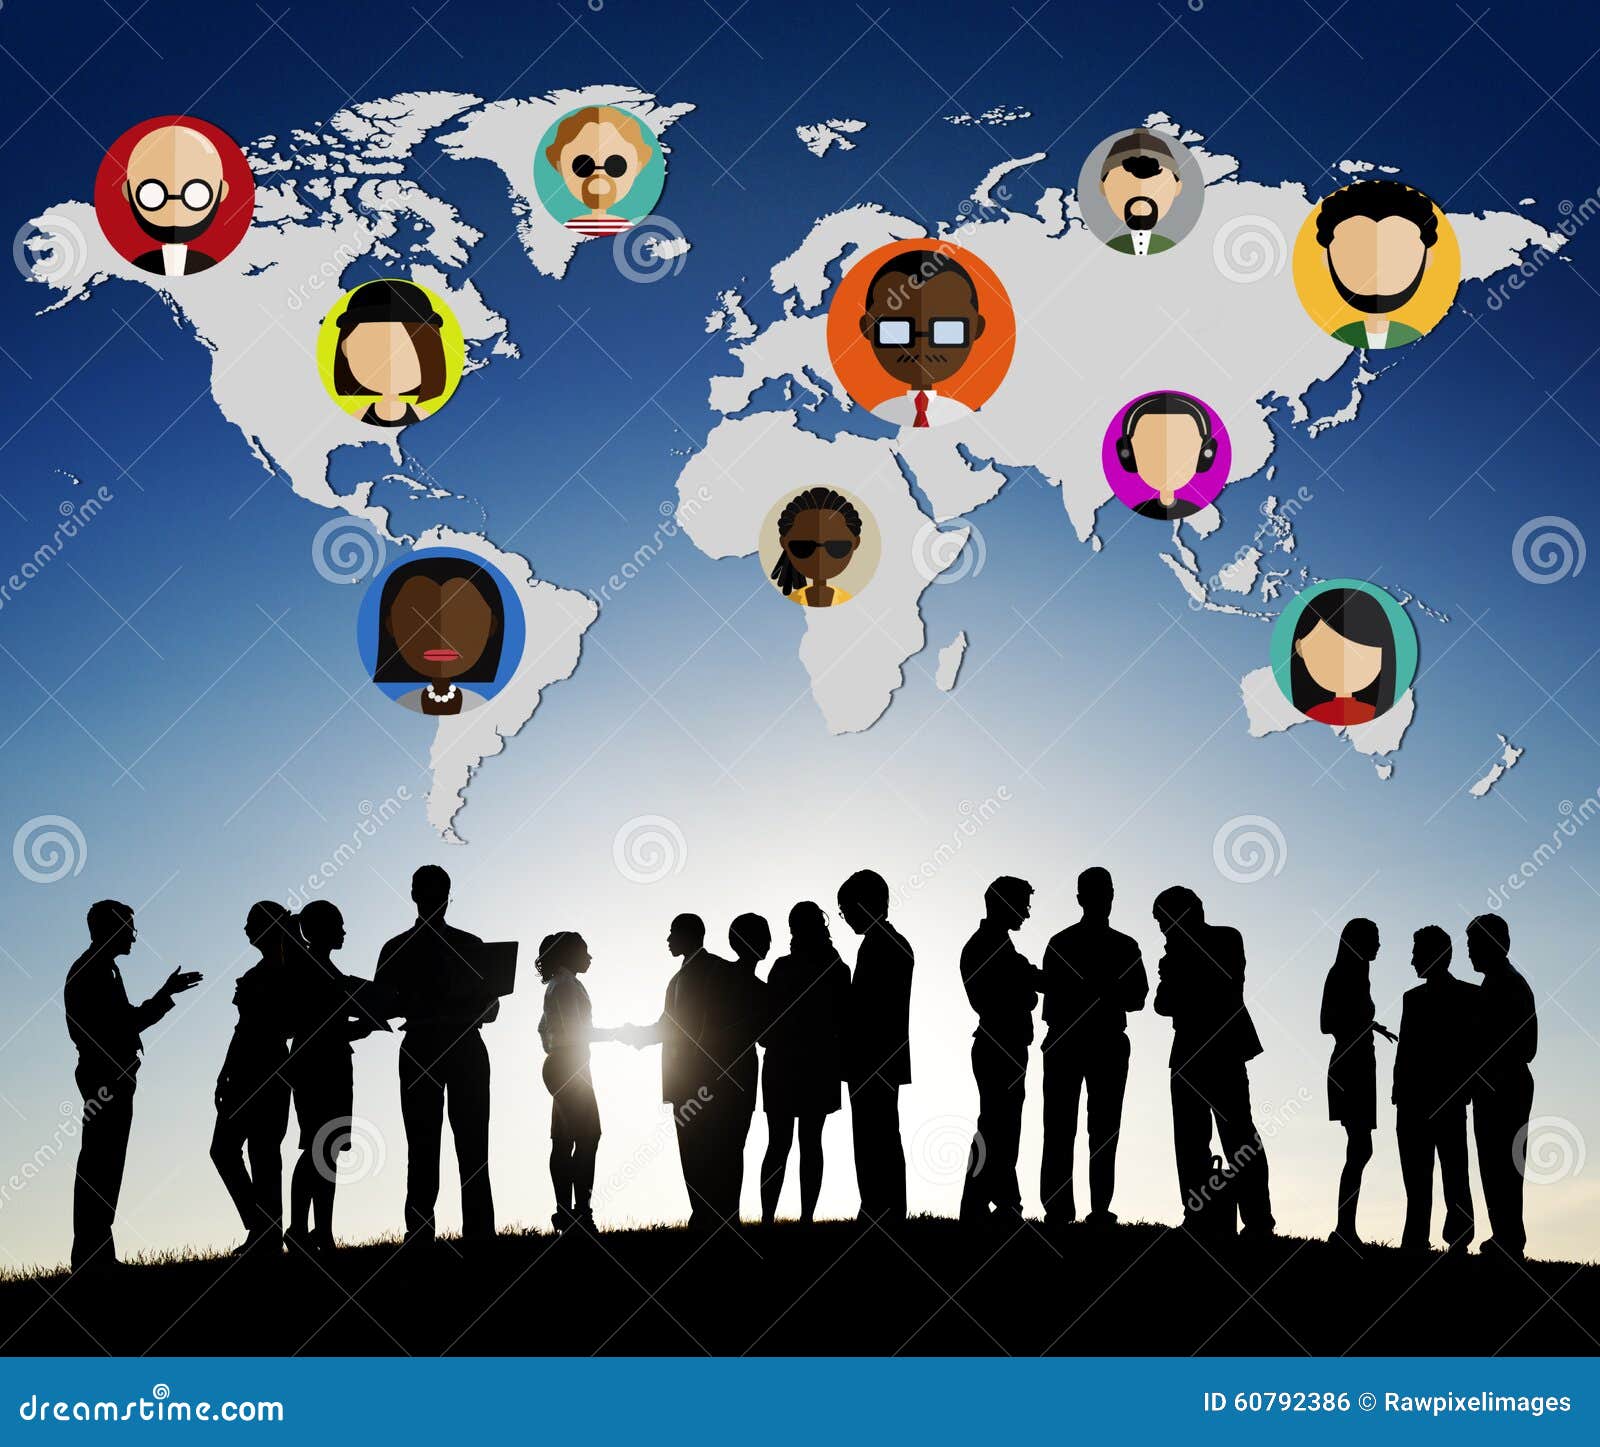 global community world people international nationality concept